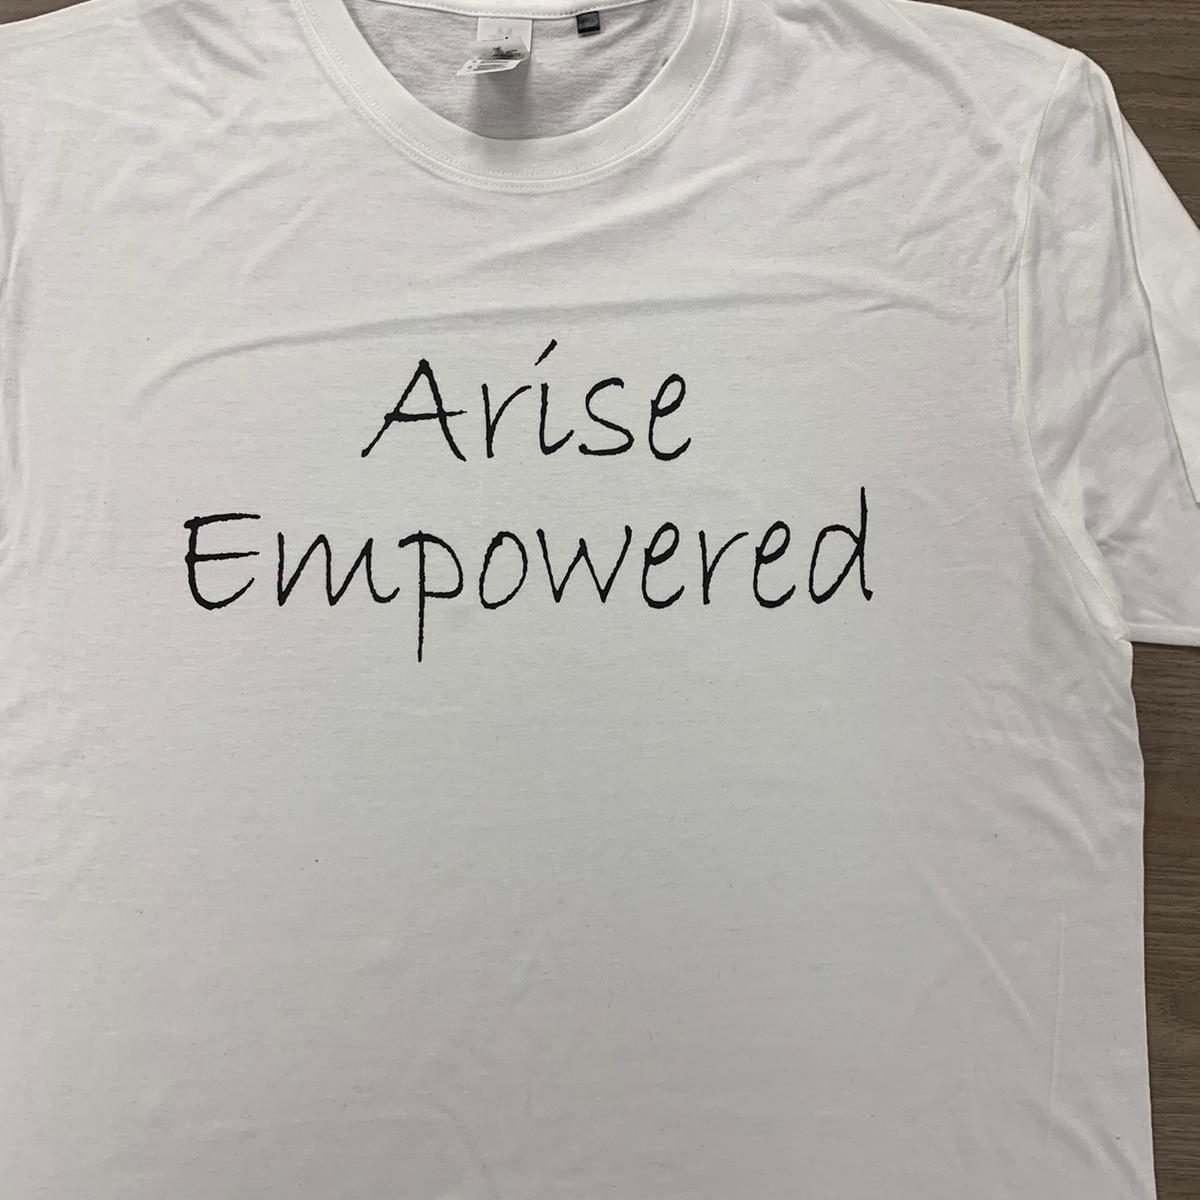 Arise empowered